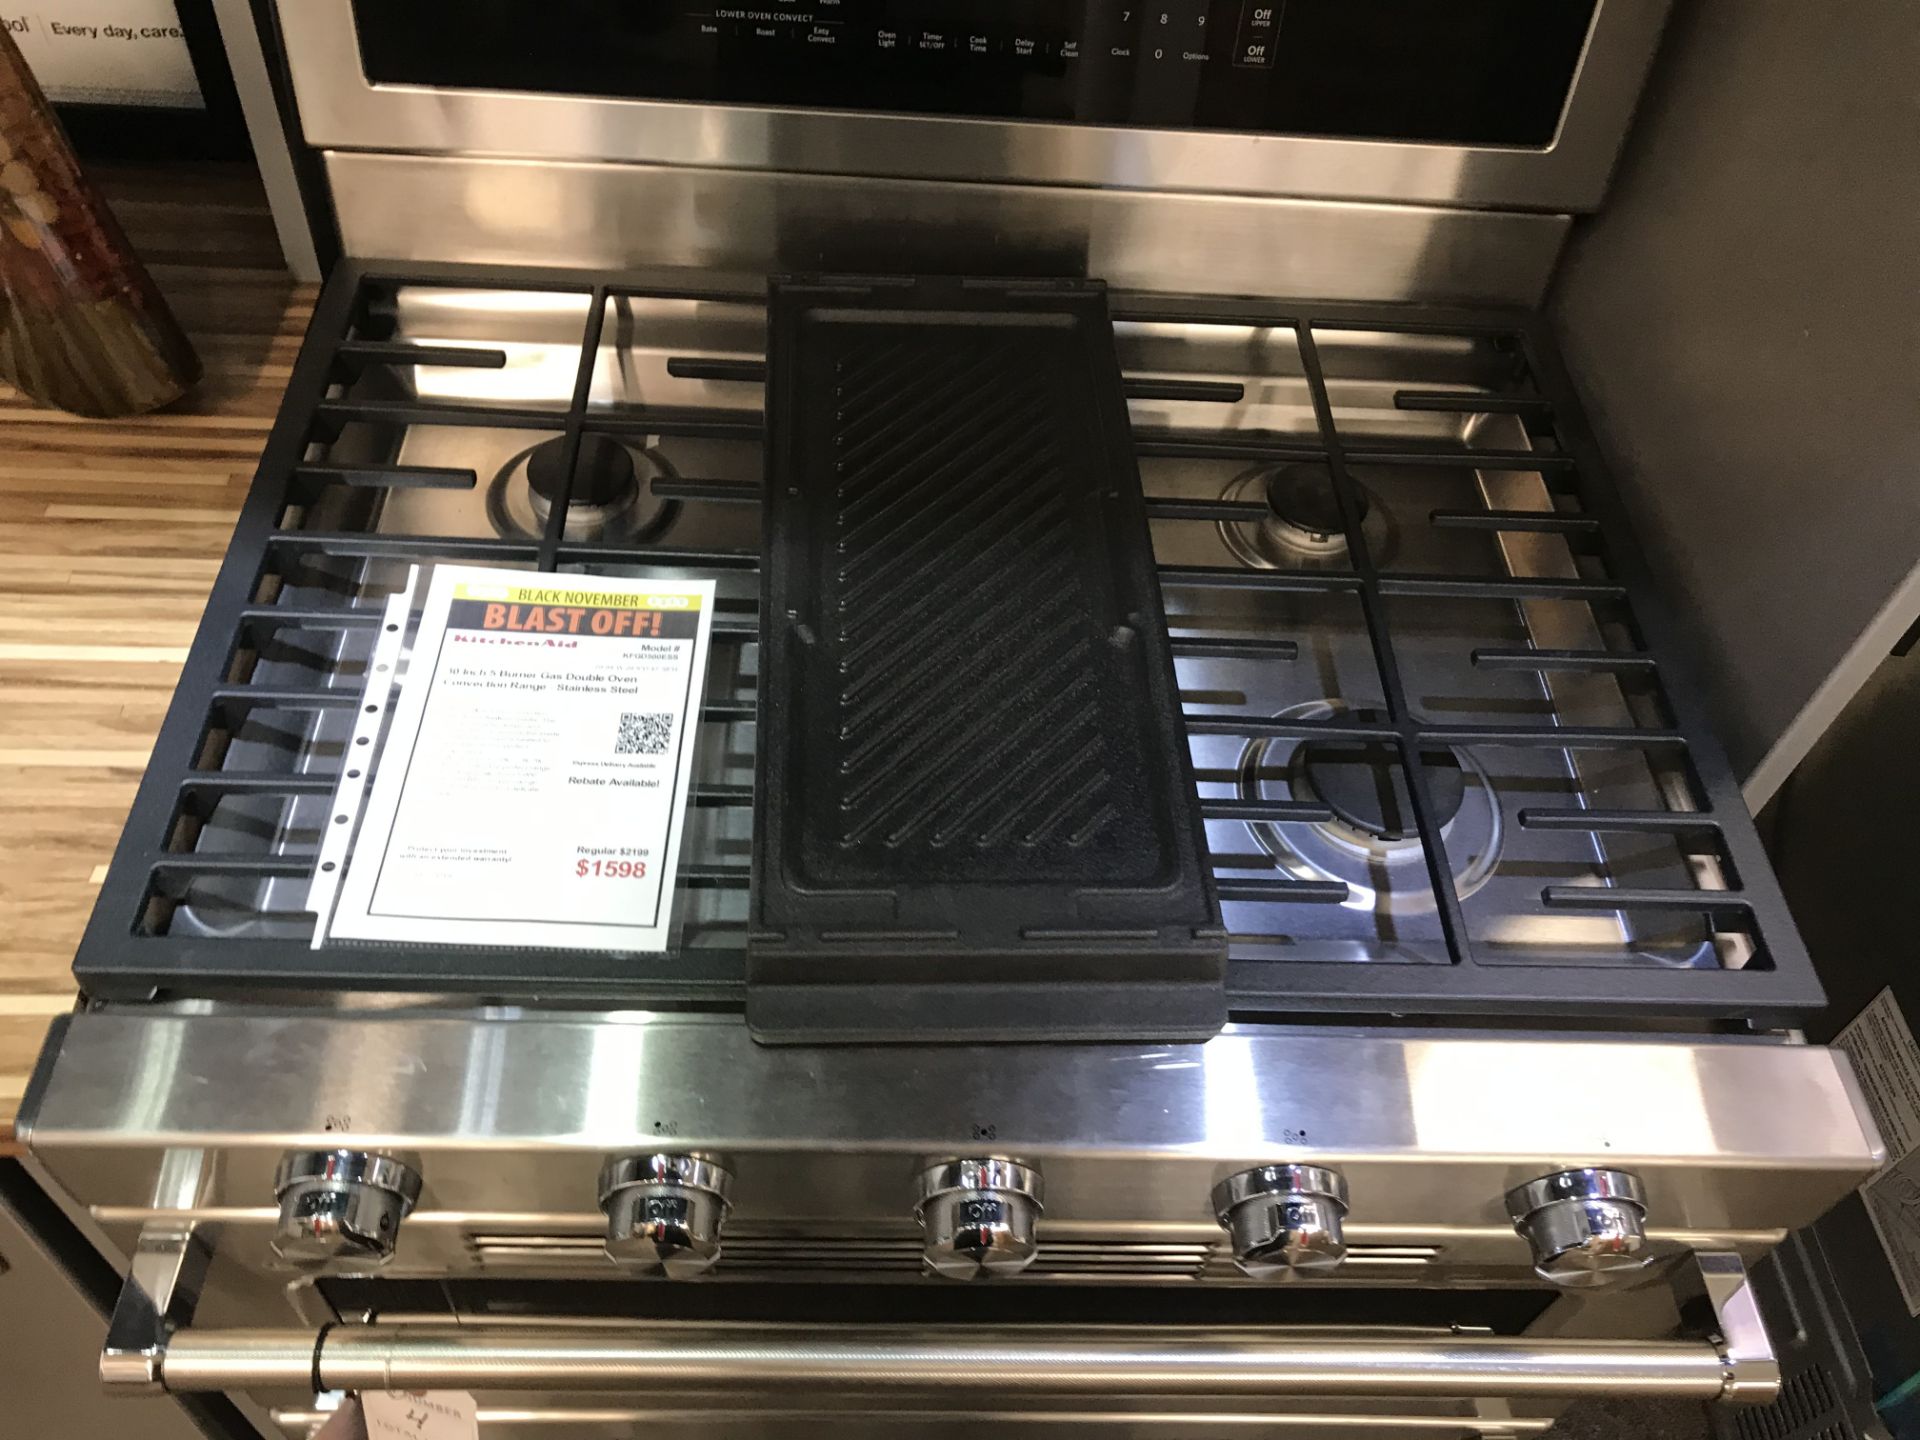 KitchenAid #KFGD500ESS SS 5 Burner Gas Double Oven Range 29.94"W x 28.5"D x 47.38"H (Retail - Image 3 of 3